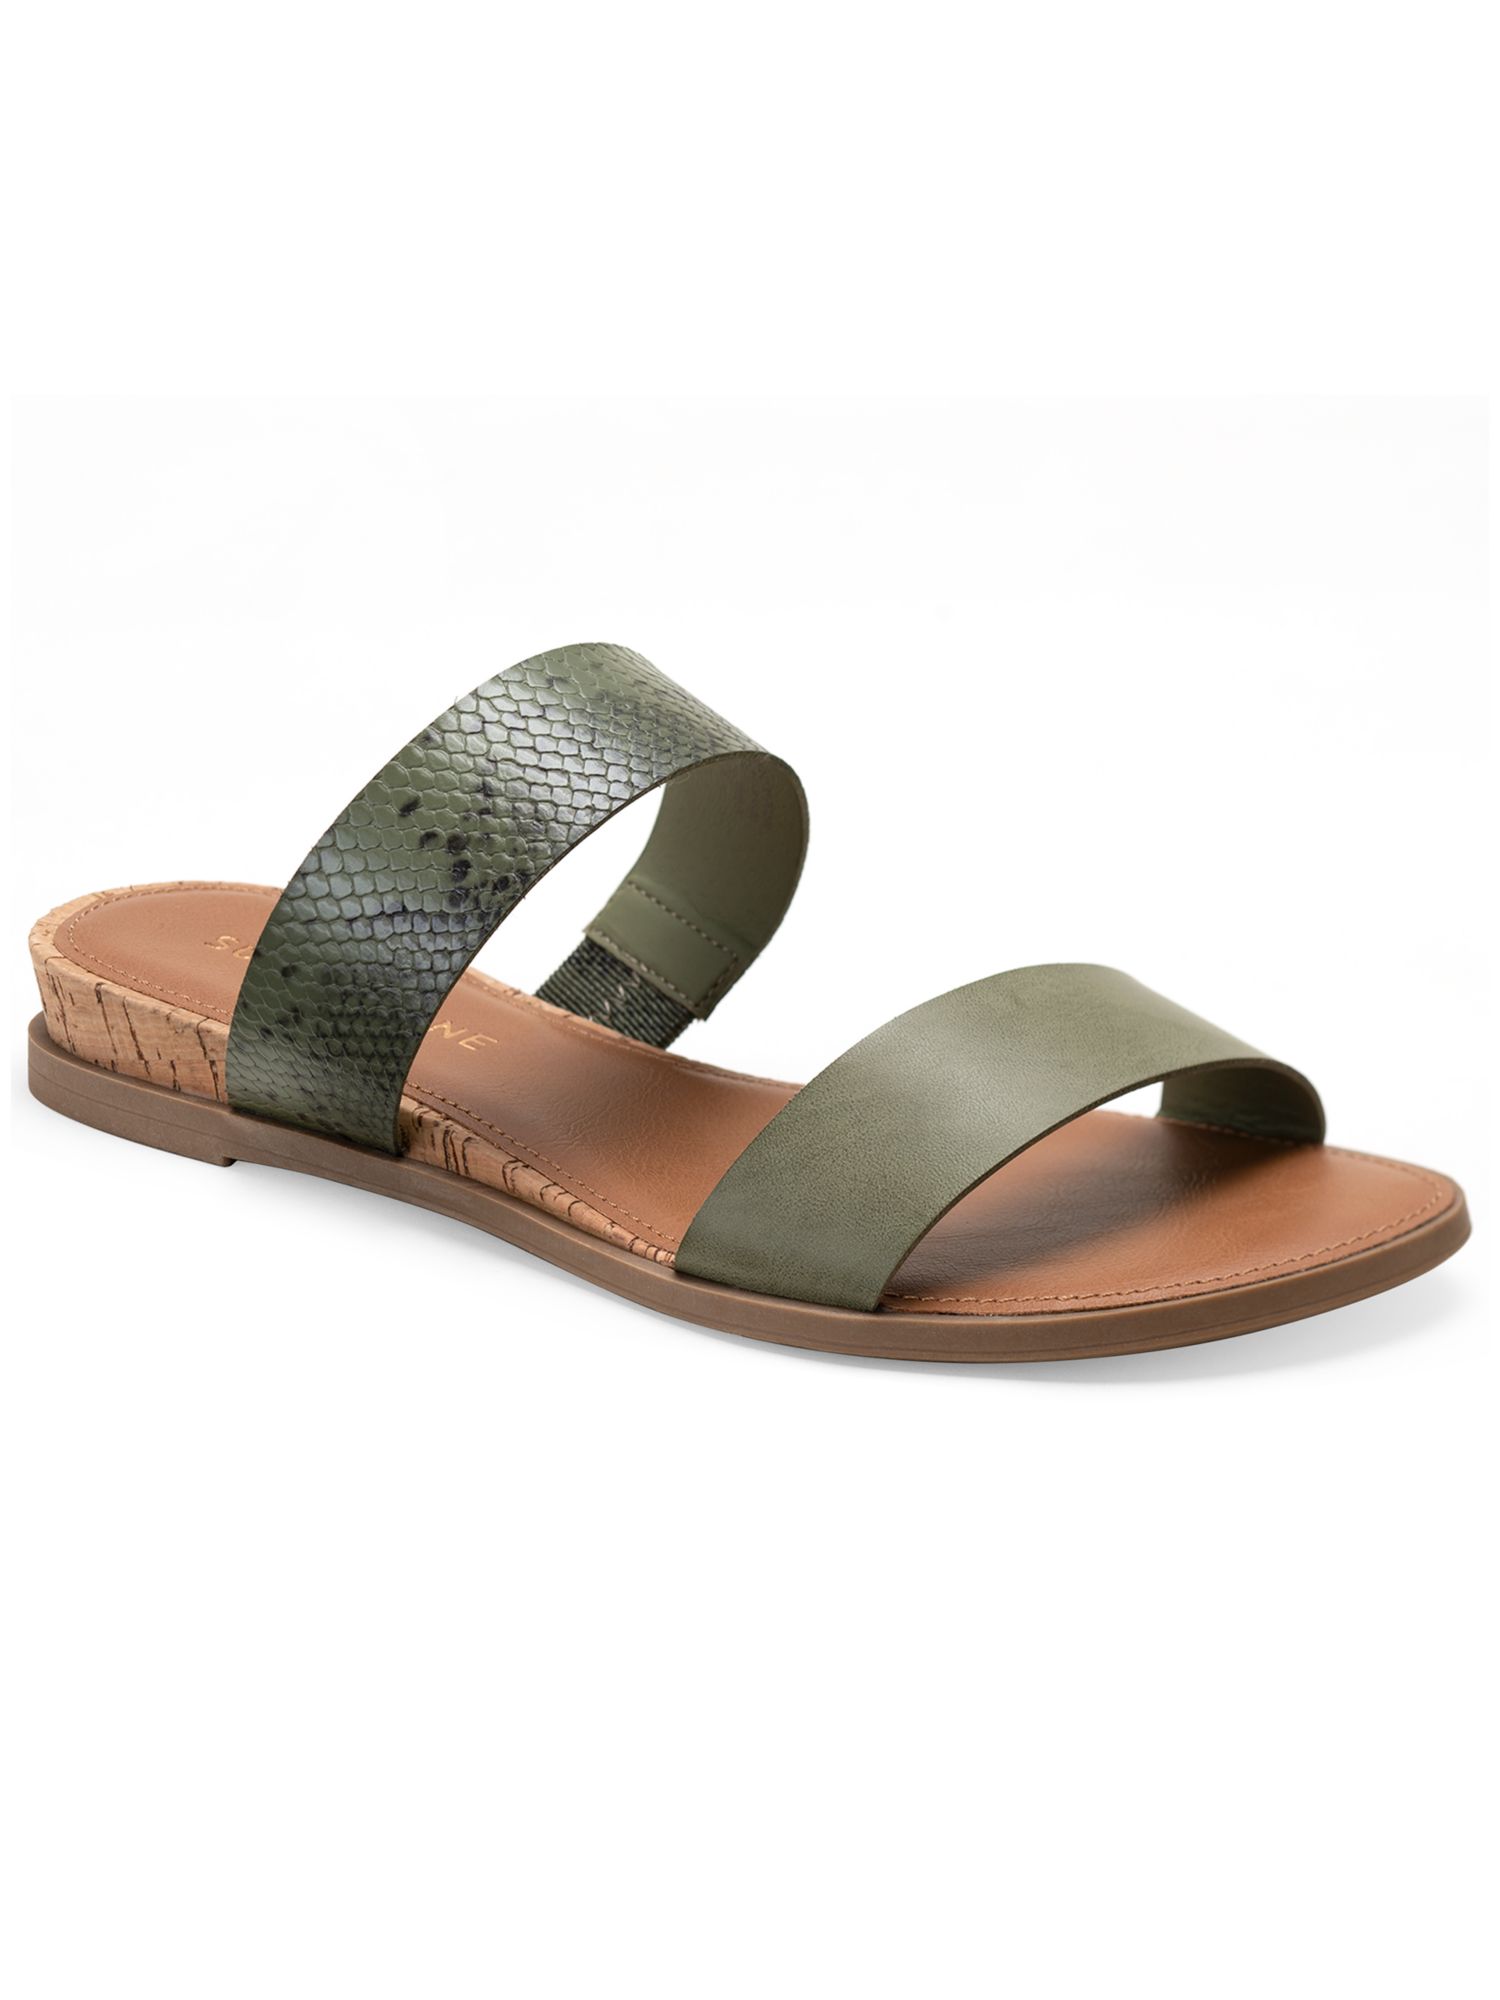 Sun + Stone SUN STONE Womens Green Snakeskin Cushioned Slip Resistant Easten Round Toe Wedge Slip On Slide Sandals Shoes 9.5 M